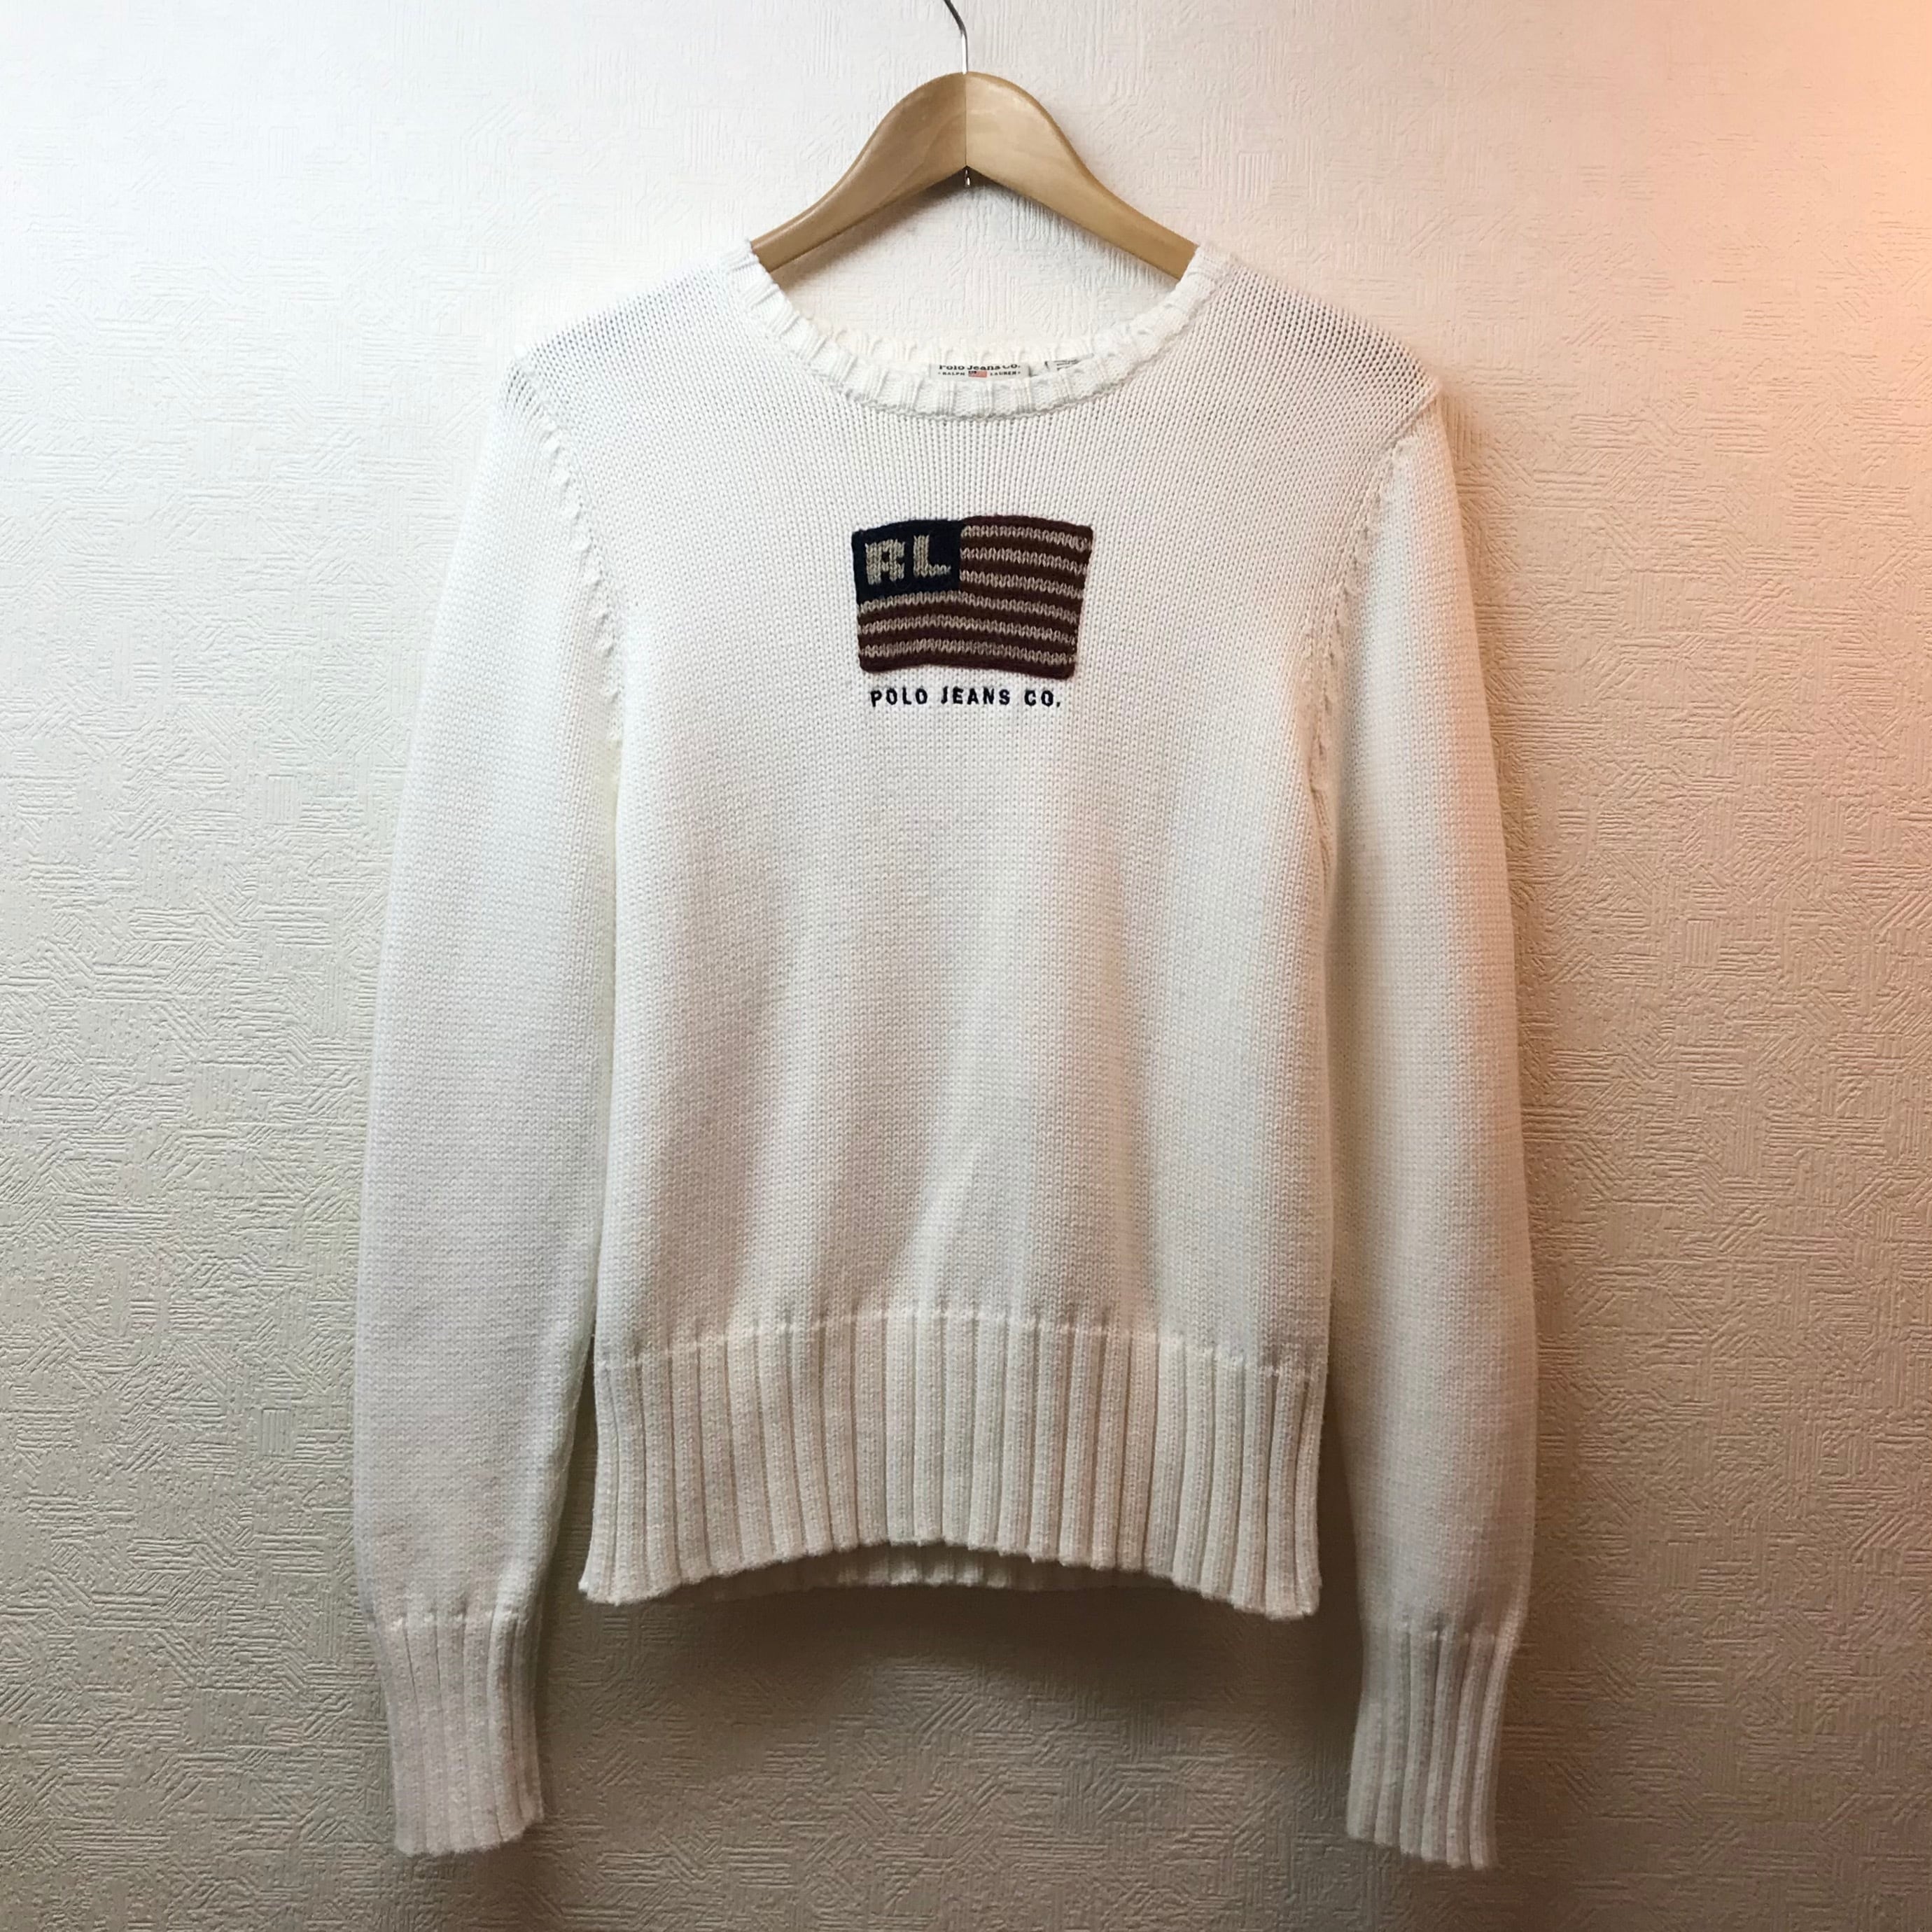 Polo Jeans Co. Ralph Lauren / Cotton Knit Sweater | TEKITOU CLOTHING